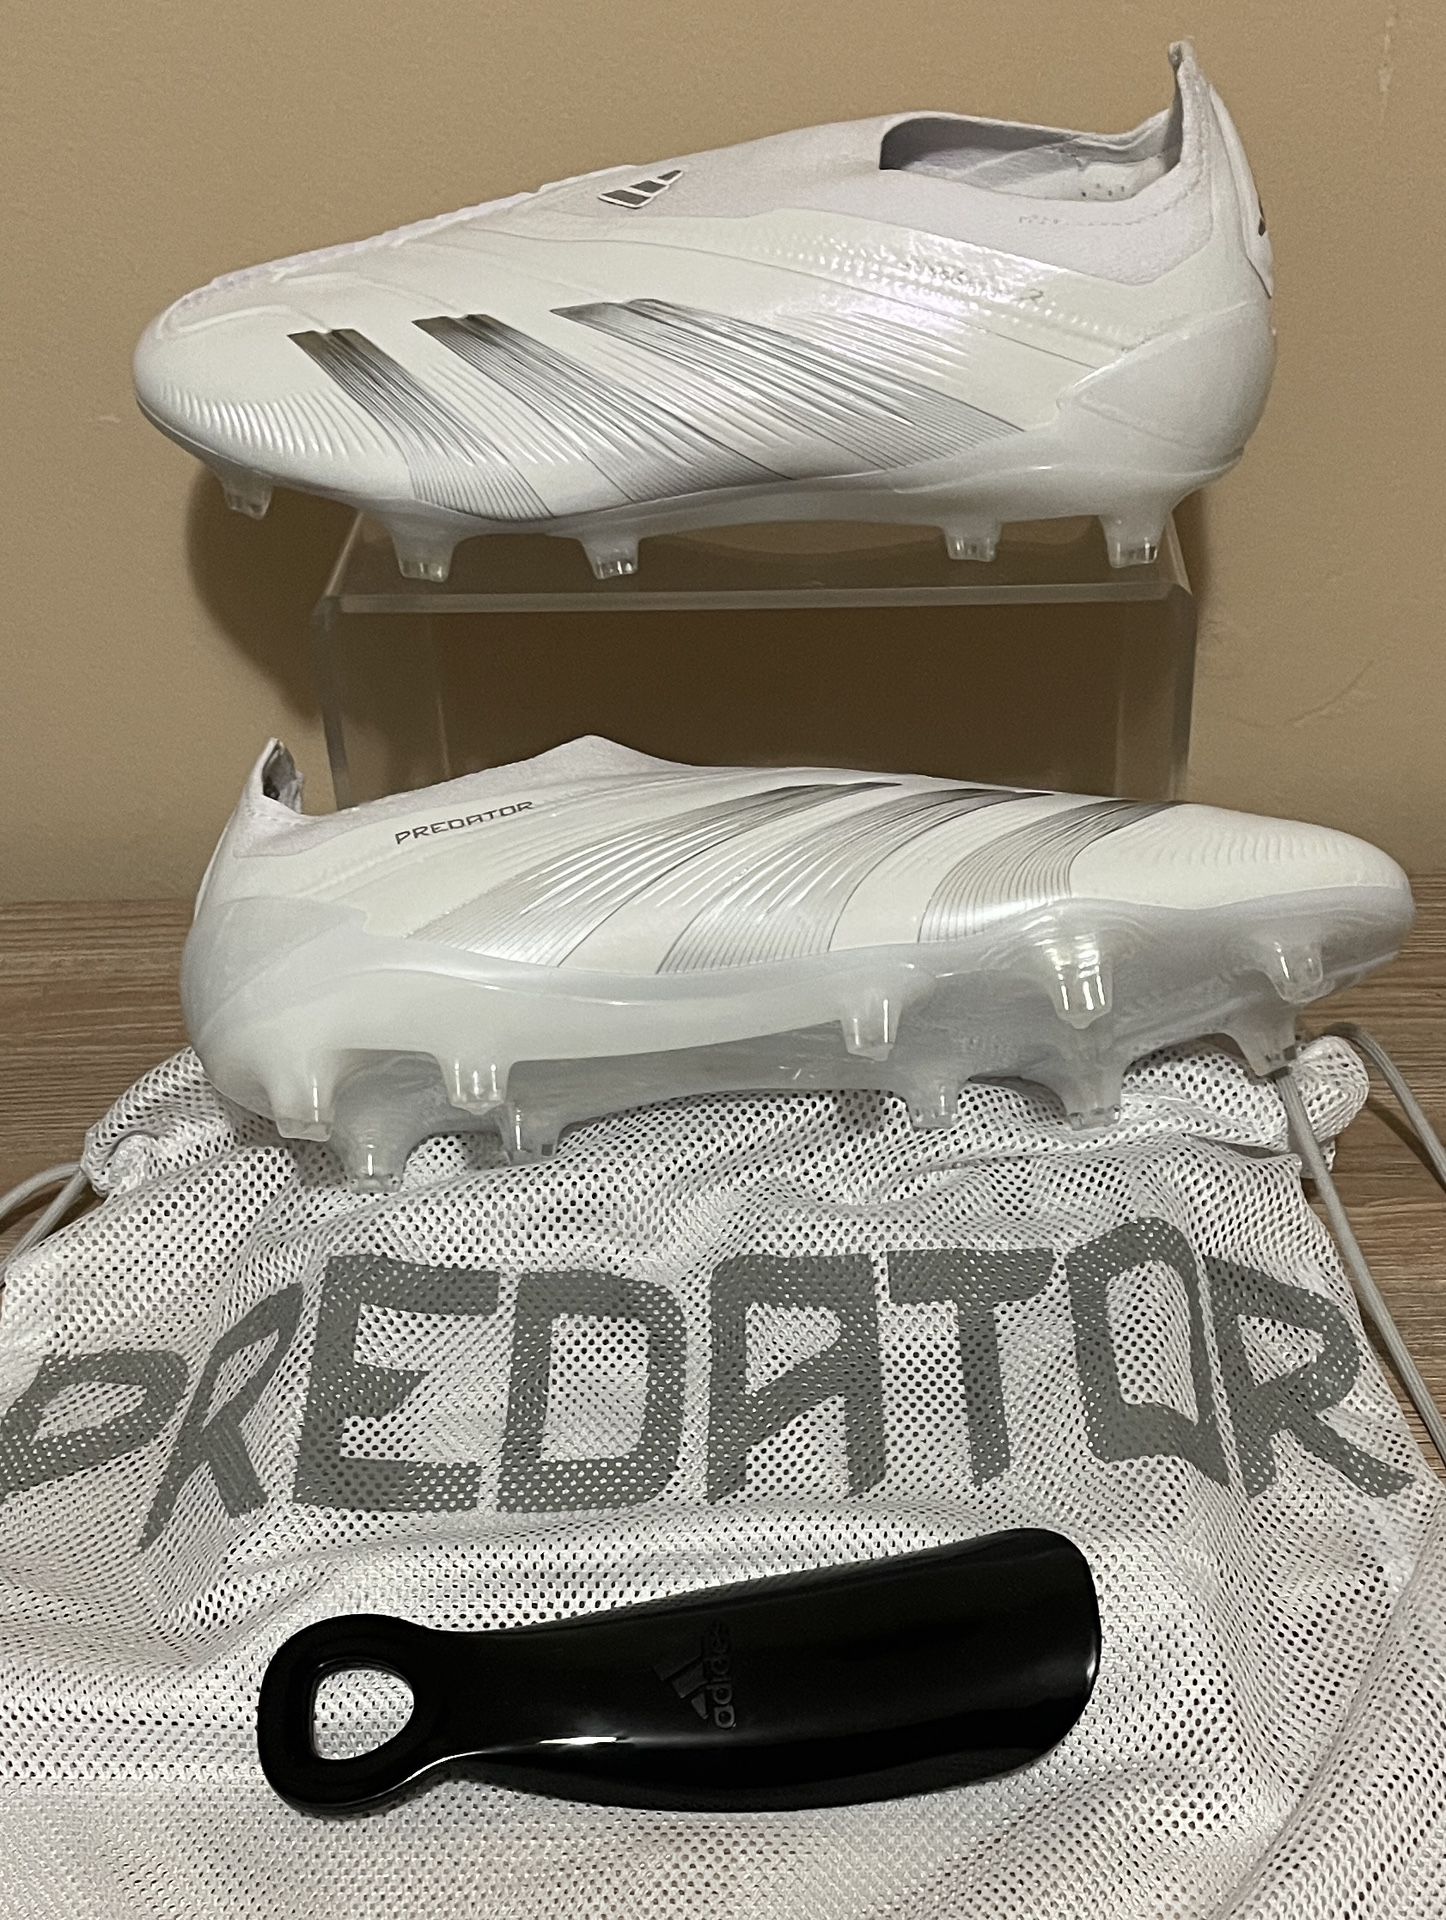 Adidas  predator  Size Available “9”